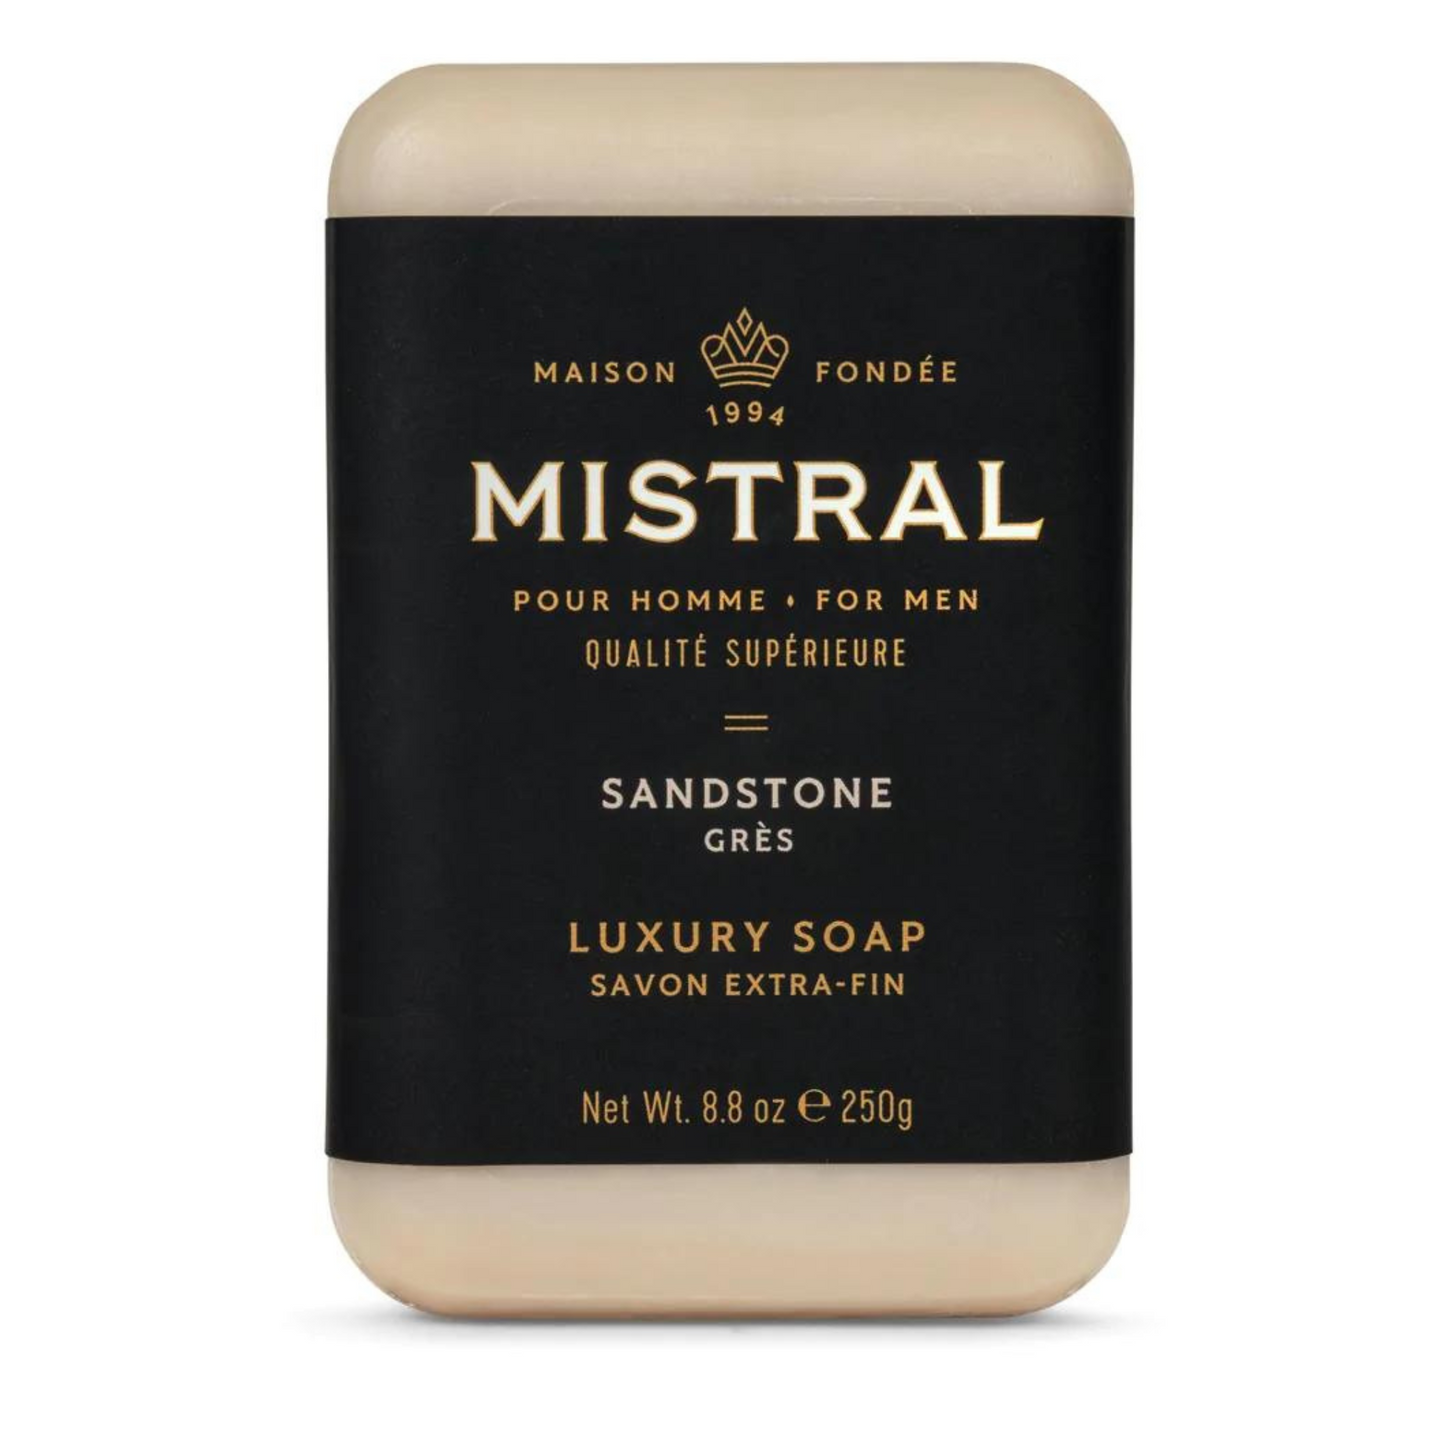 Primary Image of Mistral Sandstone Bar Soap (8.8 oz)